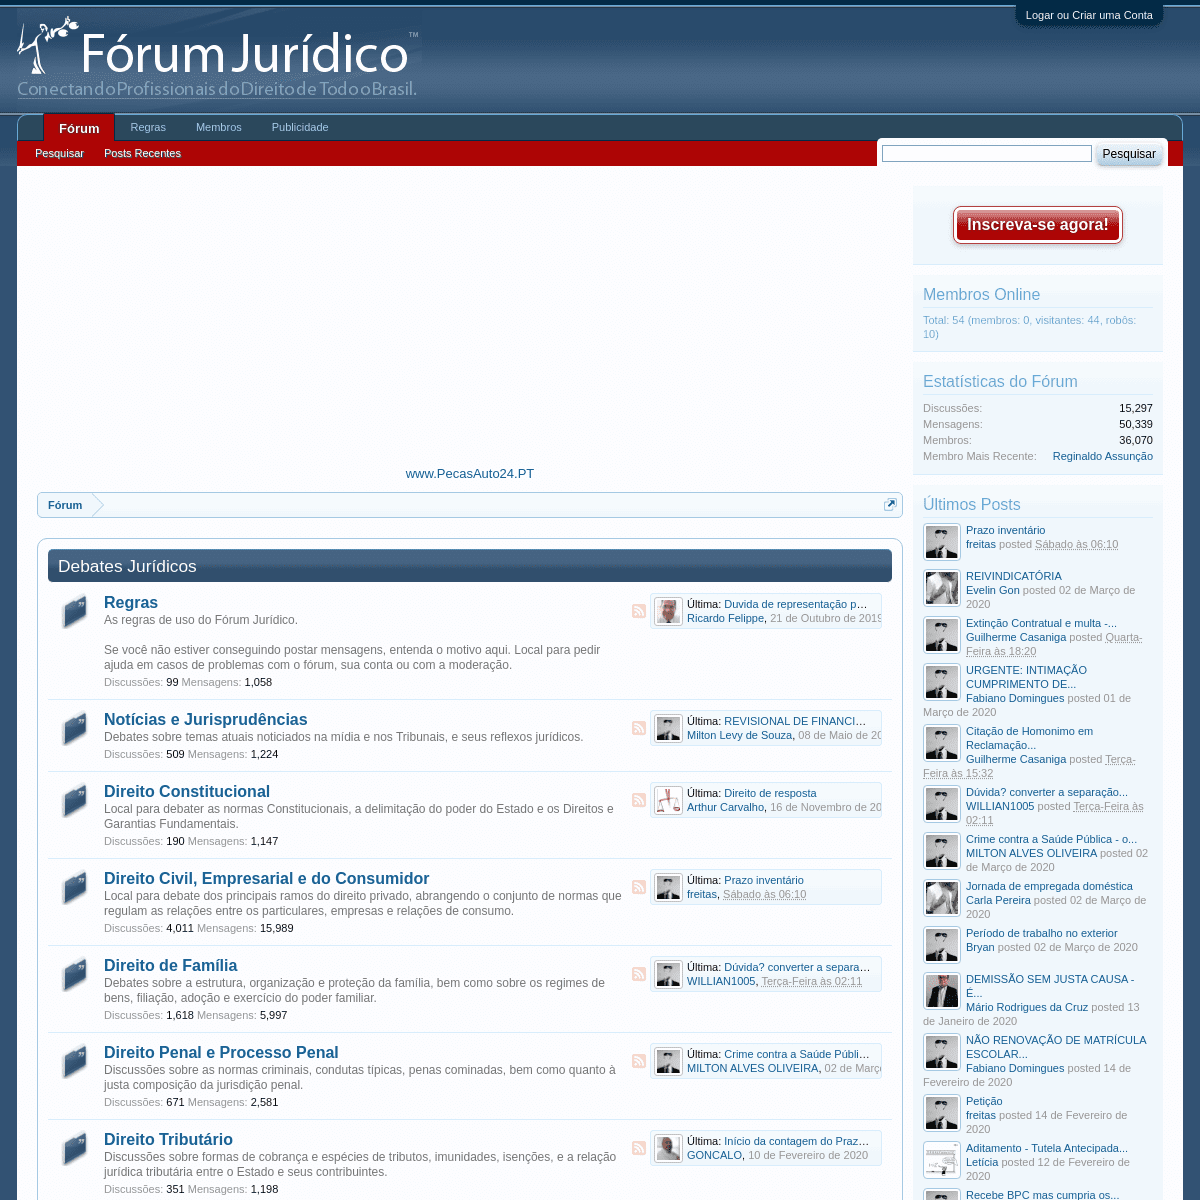 A complete backup of forumjuridico.org